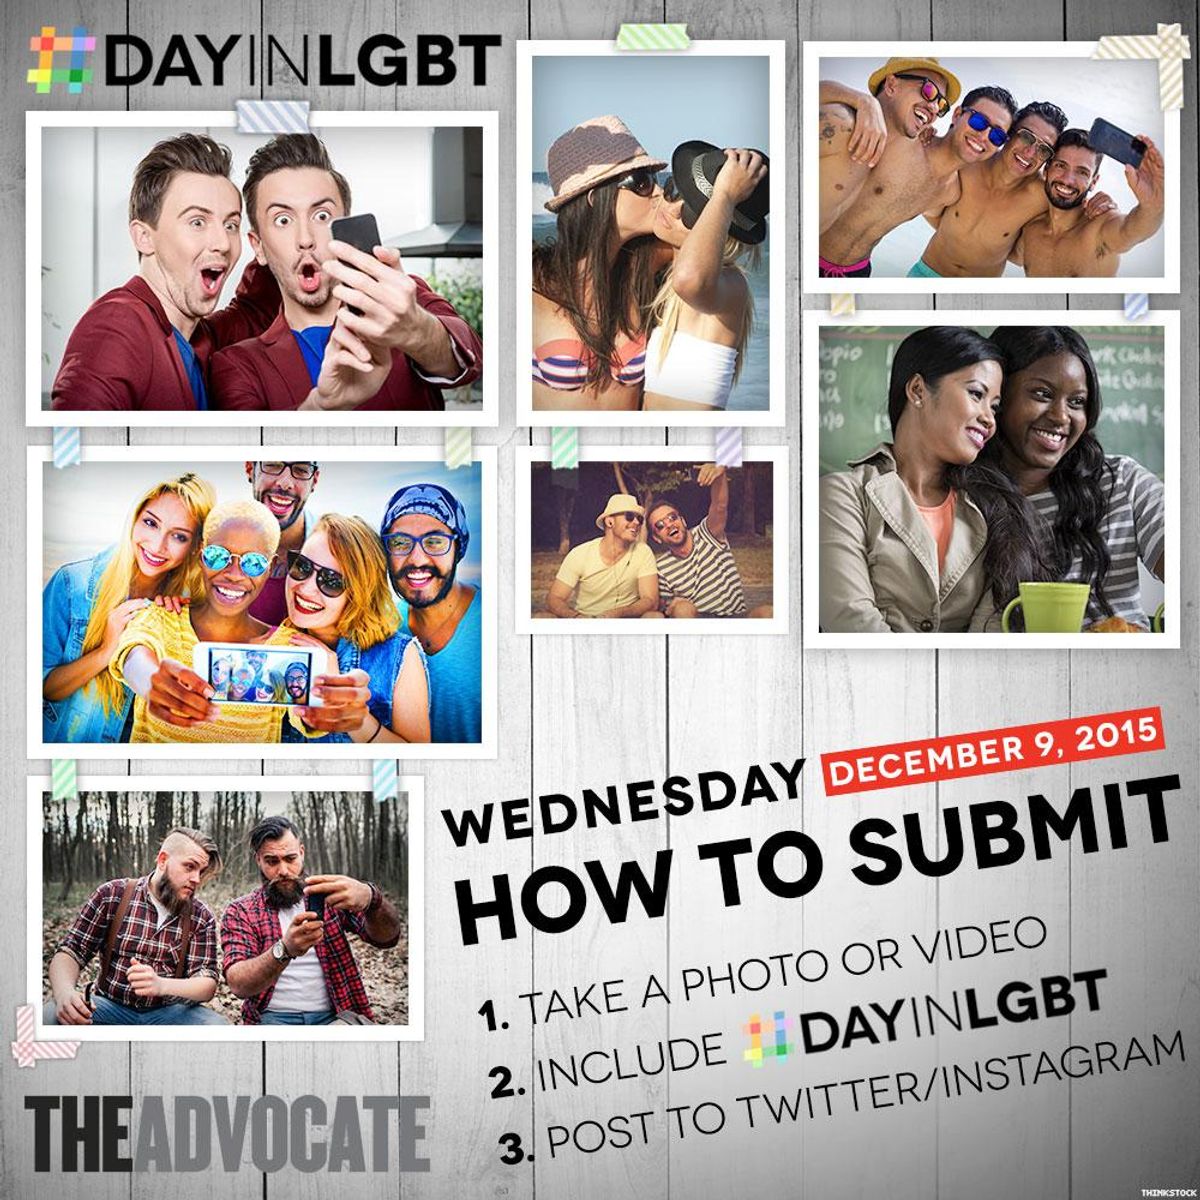 Day in LGBT